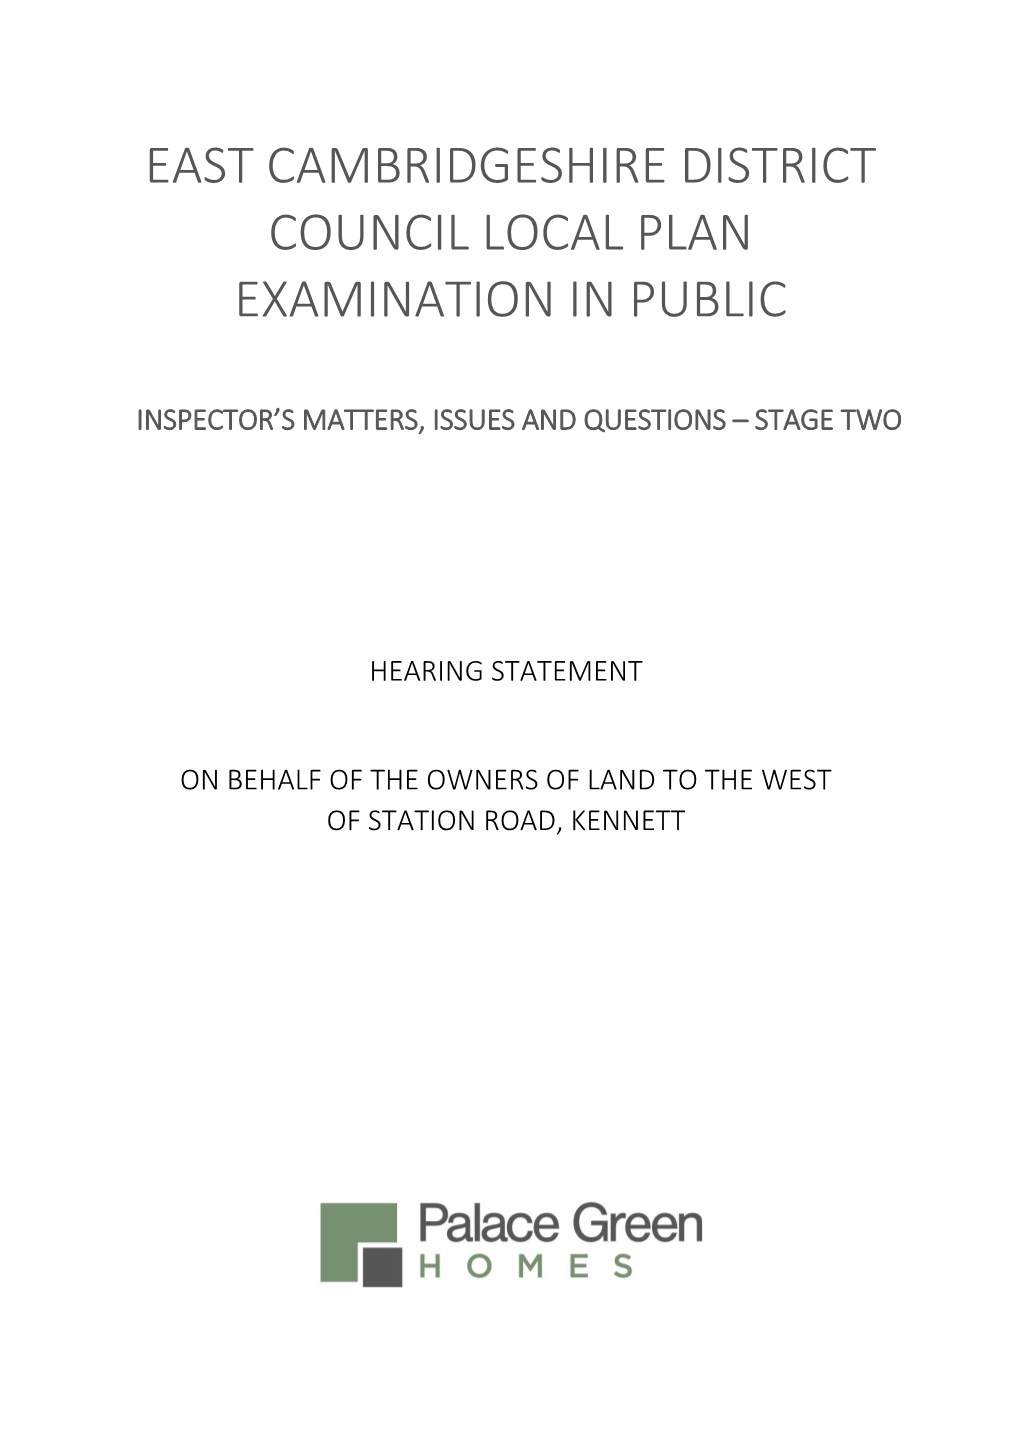 East Cambridgeshire District Council Local Plan Examination in Public